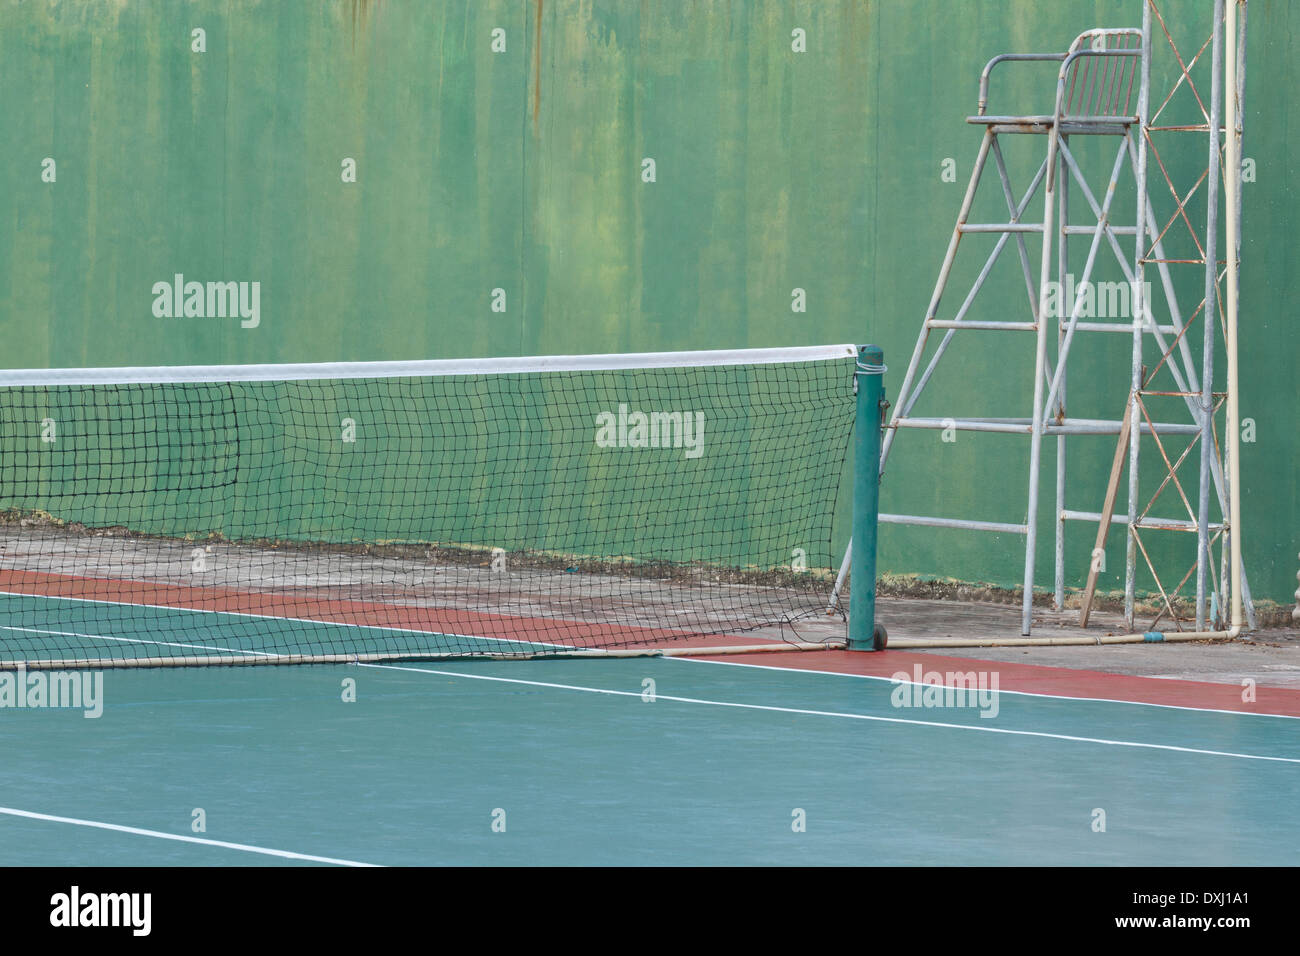 Pista de tenis con net (pista dura) Foto de stock